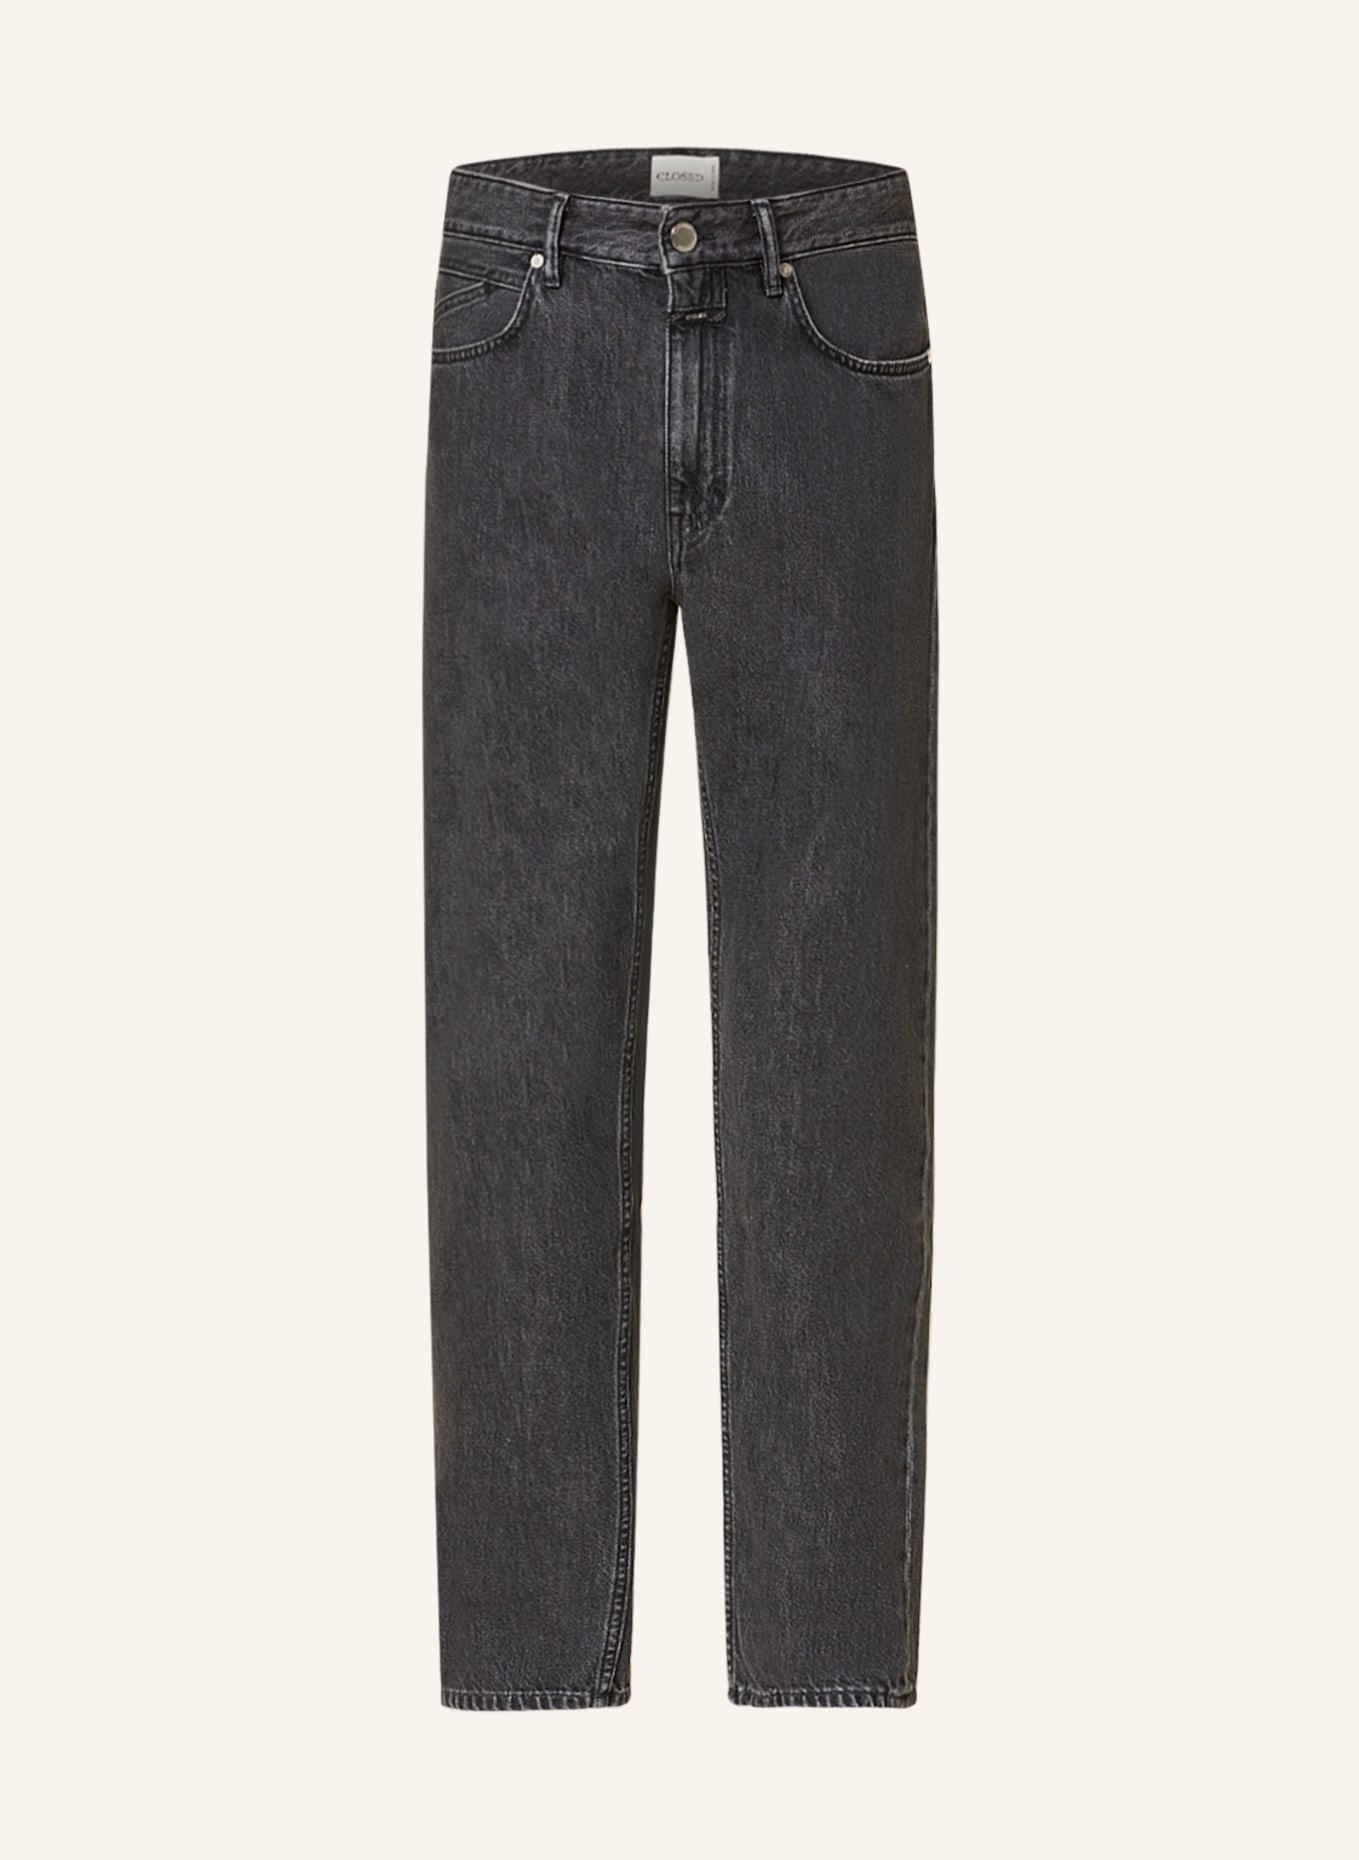 CLOSED Jeans COOPER TRUE Regular Fit, Farbe: DGY DARK GREY (Bild 1)